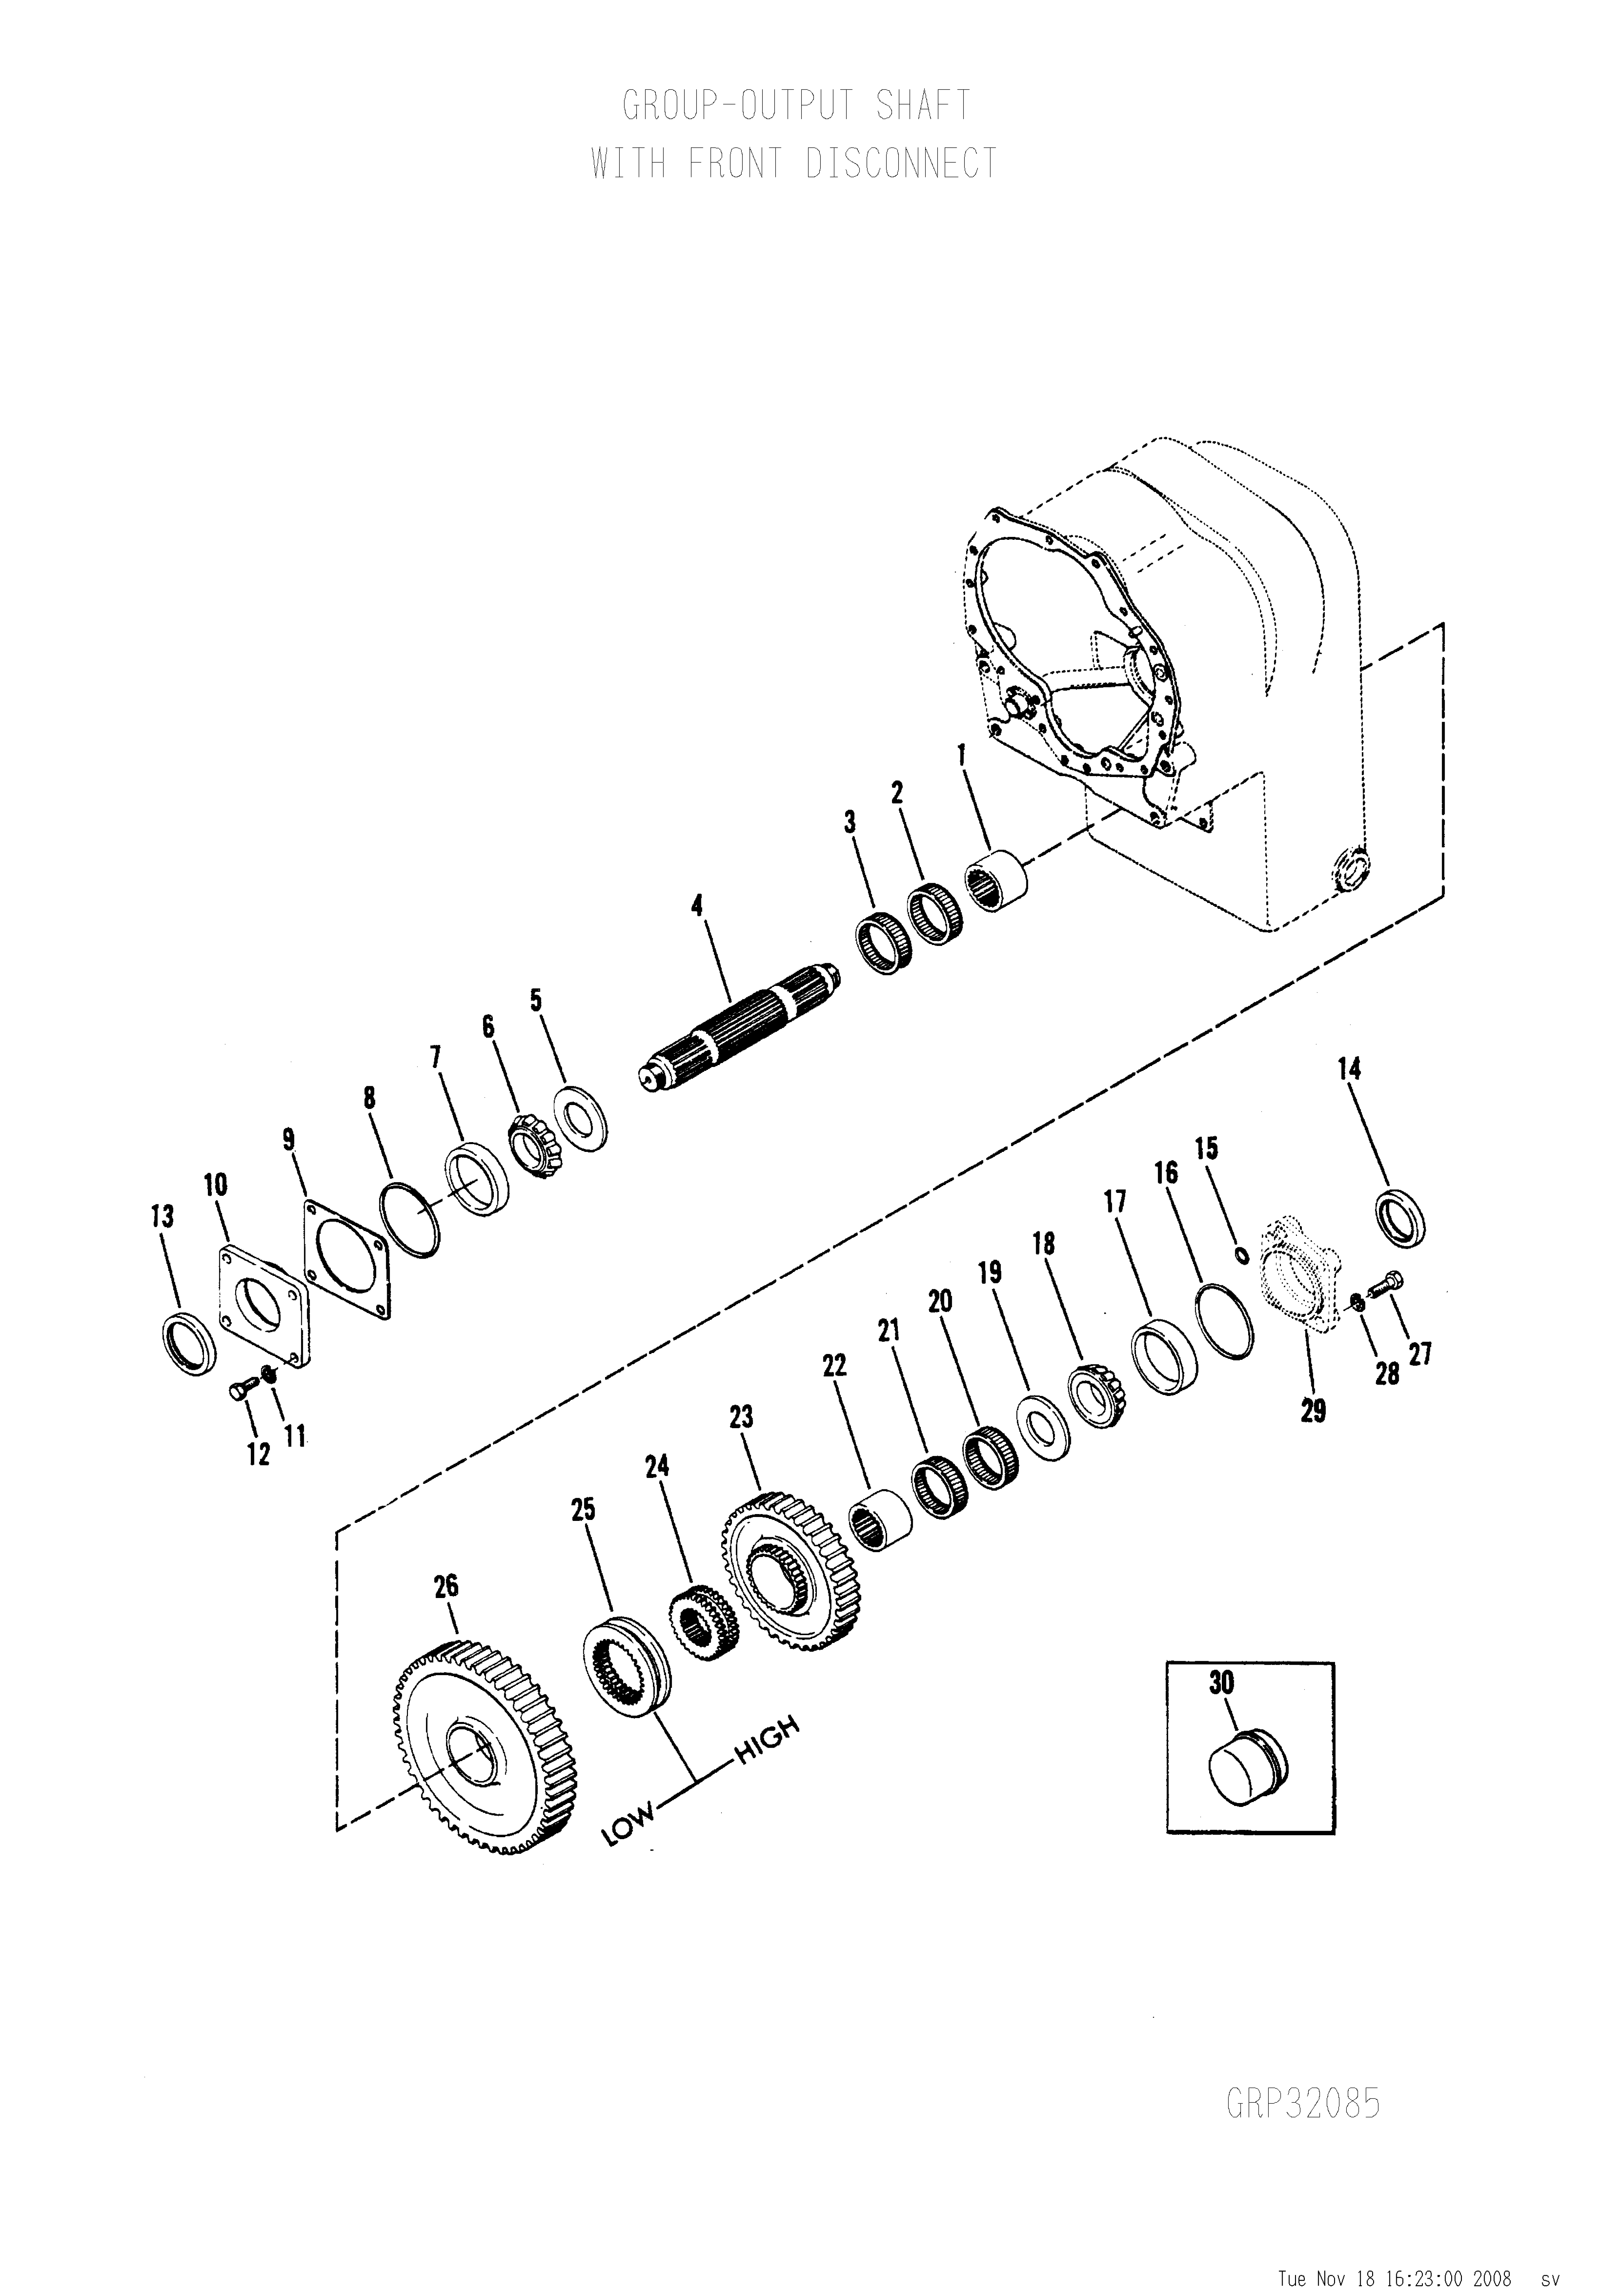 drawing for SCHOEMA, SCHOETTLER MASCHINENFABRIK K24.000247 - PISTON RING (figure 1)